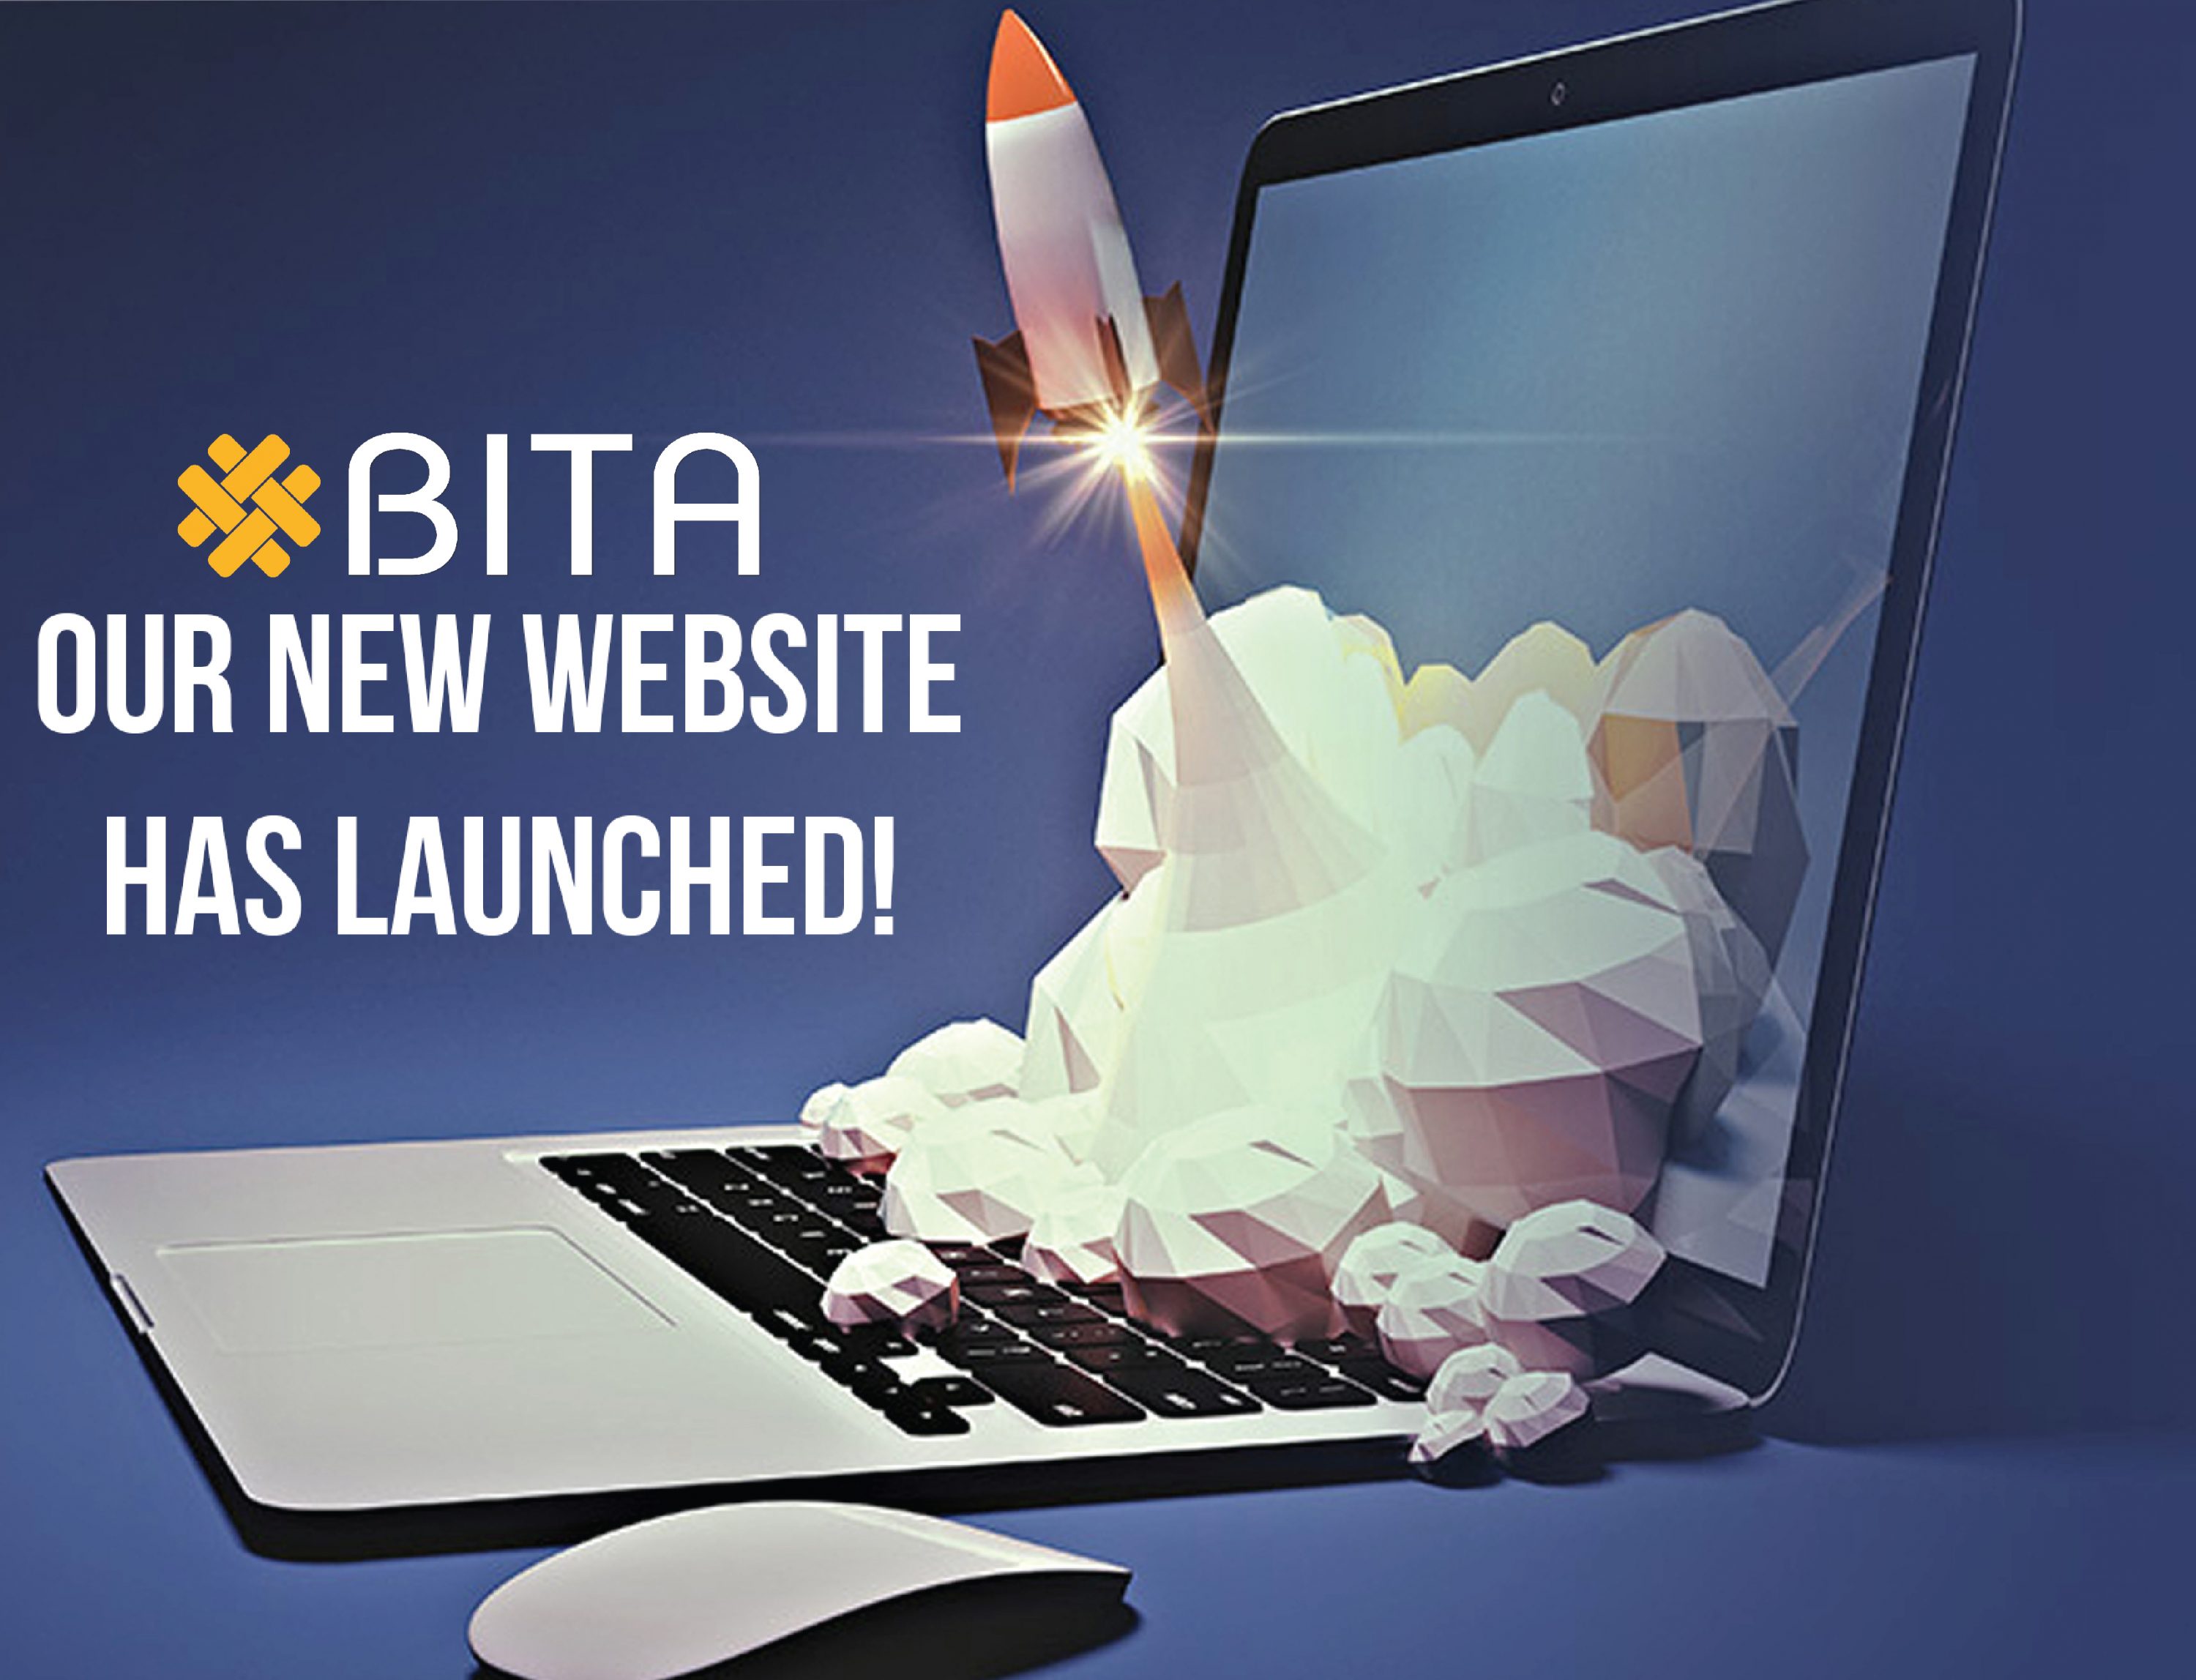 Business launch. Ноутбук ракета. Product Launch. New website. Ракета вылетает из экрана телевизора.